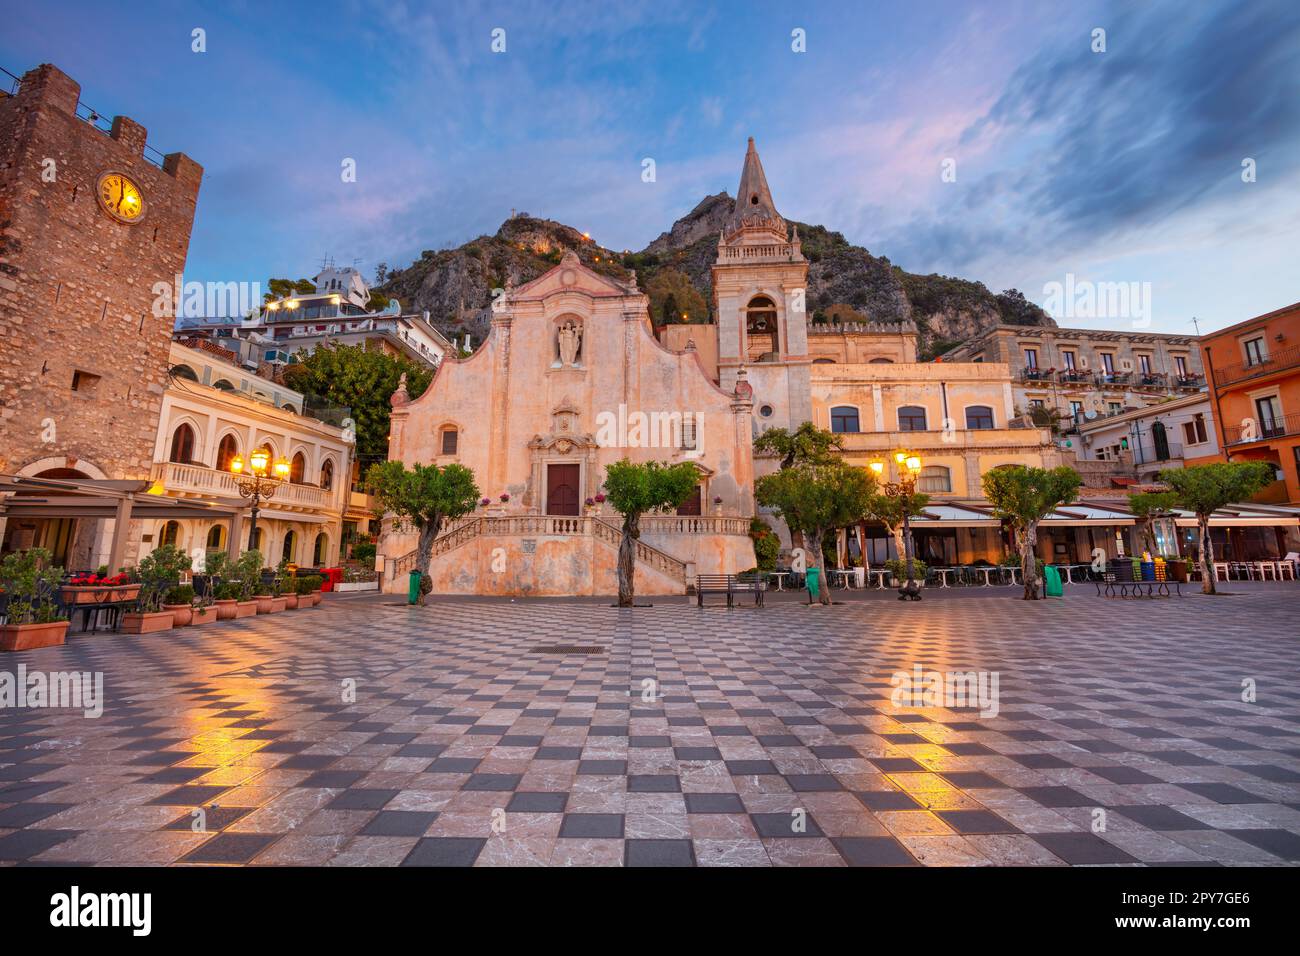 Taormina, Sizilien, Italien. Stadtbild der malerischen Stadt Taormina, Sizilien mit Hauptplatz Piazza IX Aprile und Kirche San Giuseppe bei Sonnenaufgang. Stockfoto